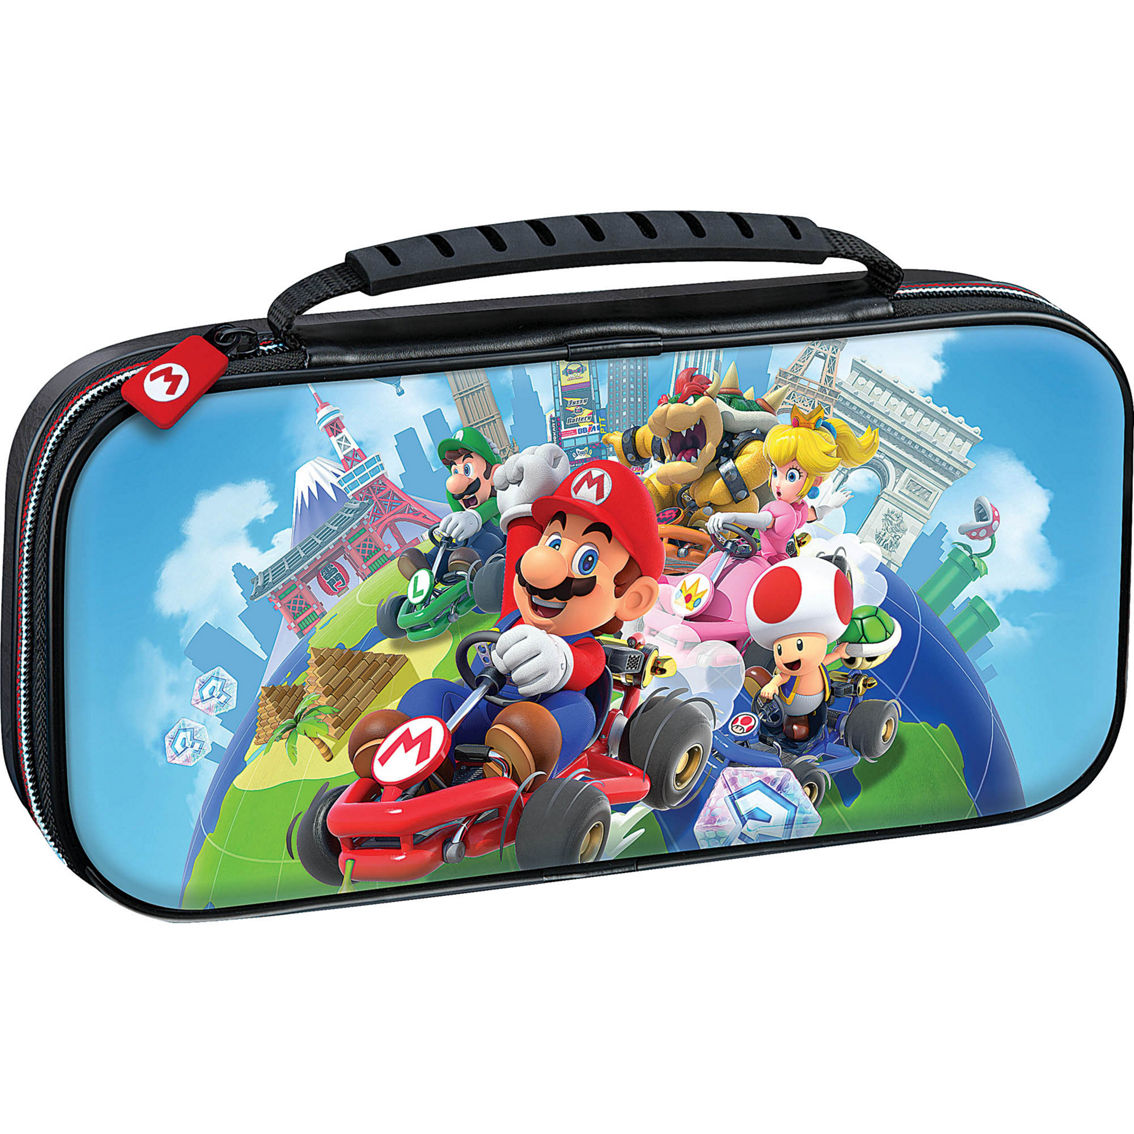 Nintendo Switch MarioKart Deluxe Travel Case - Image 2 of 2